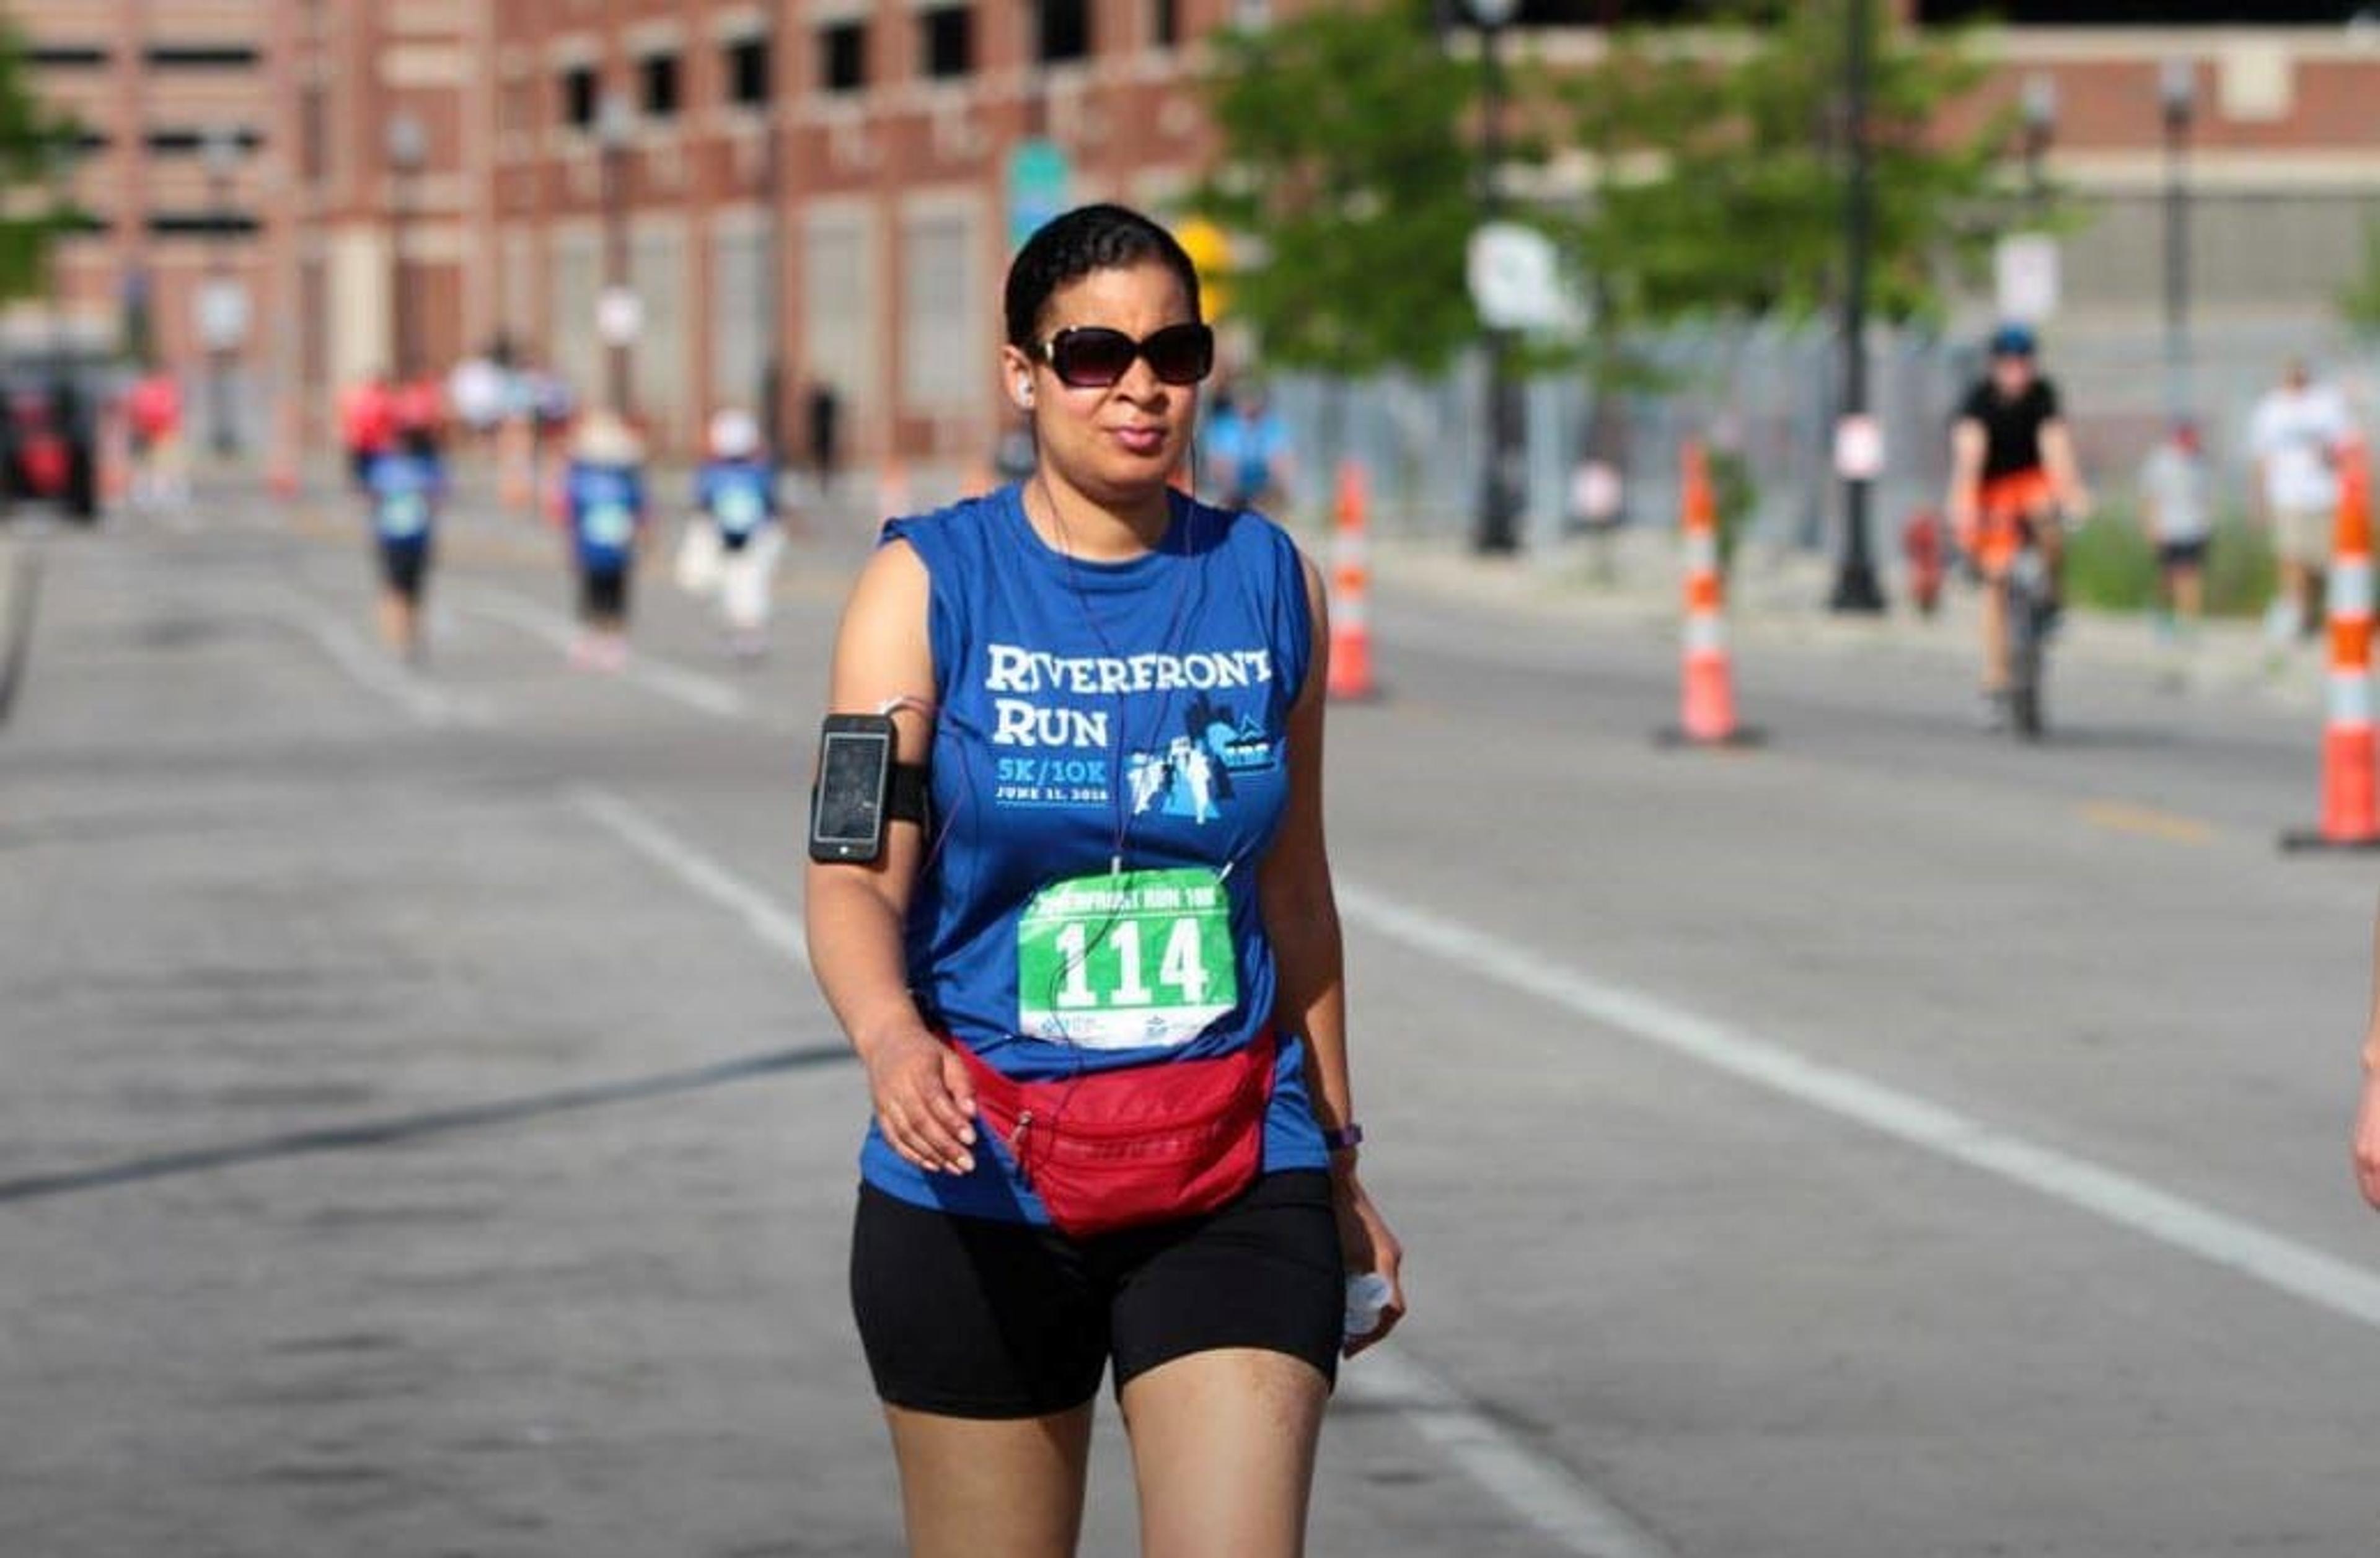 Maiya participating in Detroit's Riverfront Run.